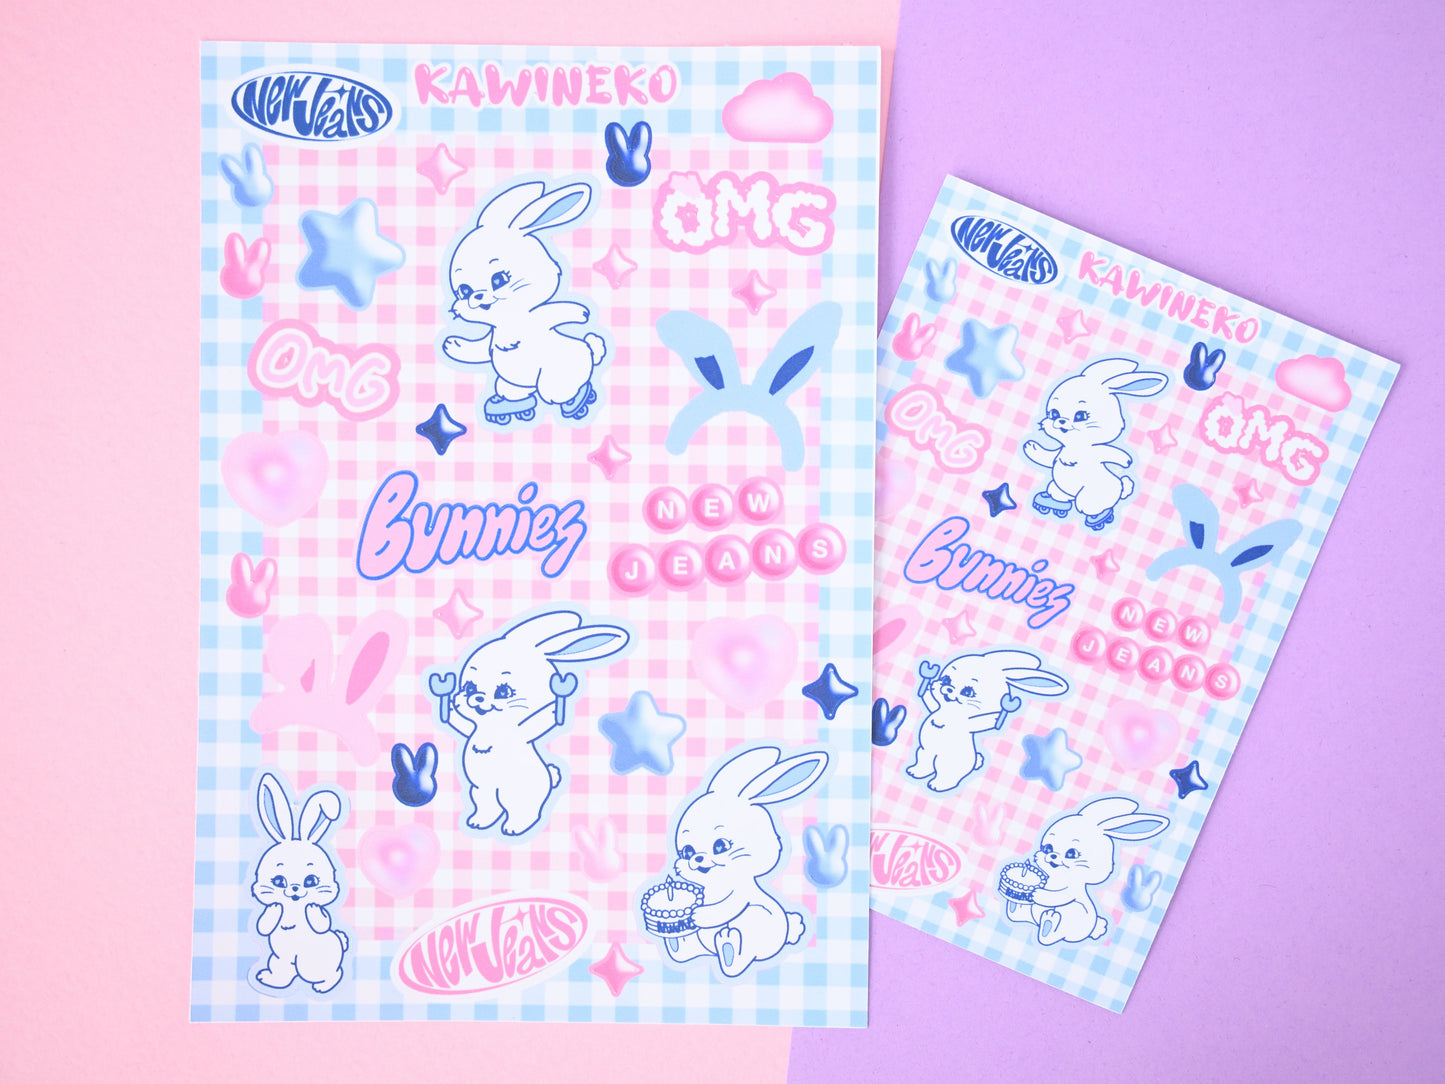 New Jeans bunny sticker sheet